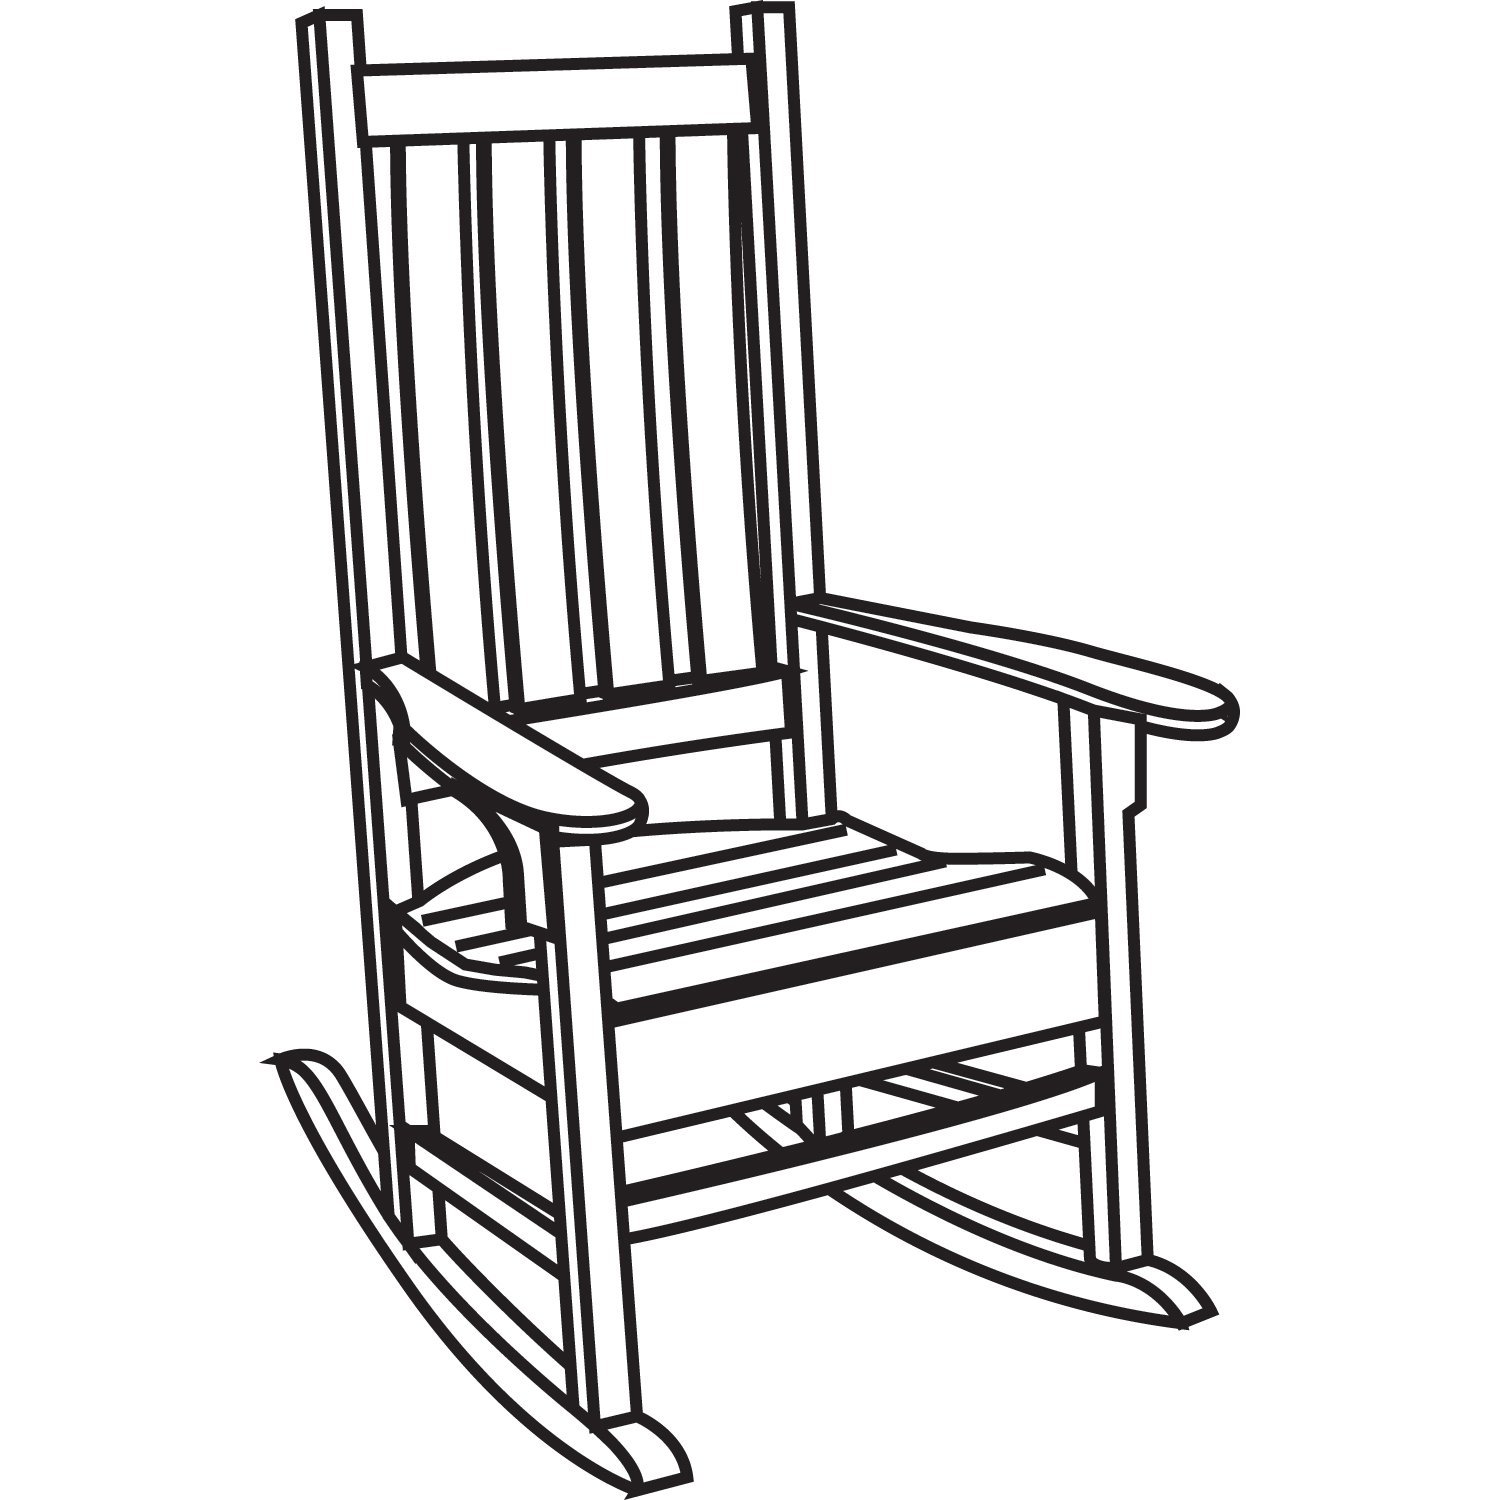 ... Rocking Chair - Illustrat